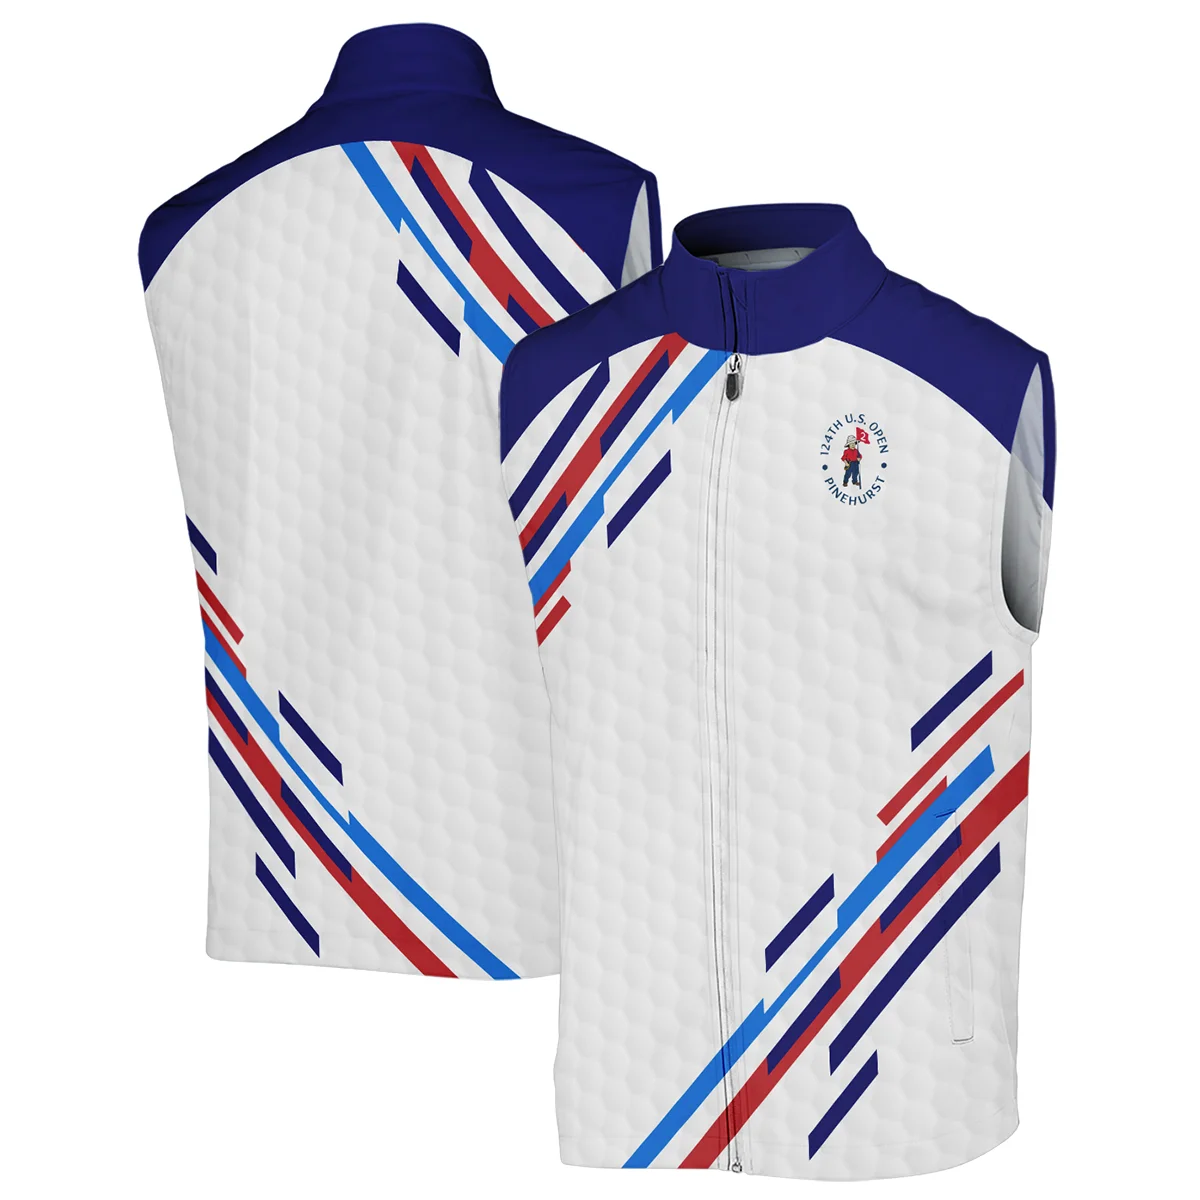 Golf Sport Titleist 124th U.S. Open Pinehurst Unisex Sweatshirt Blue Red Golf Pattern White All Over Print Sweatshirt